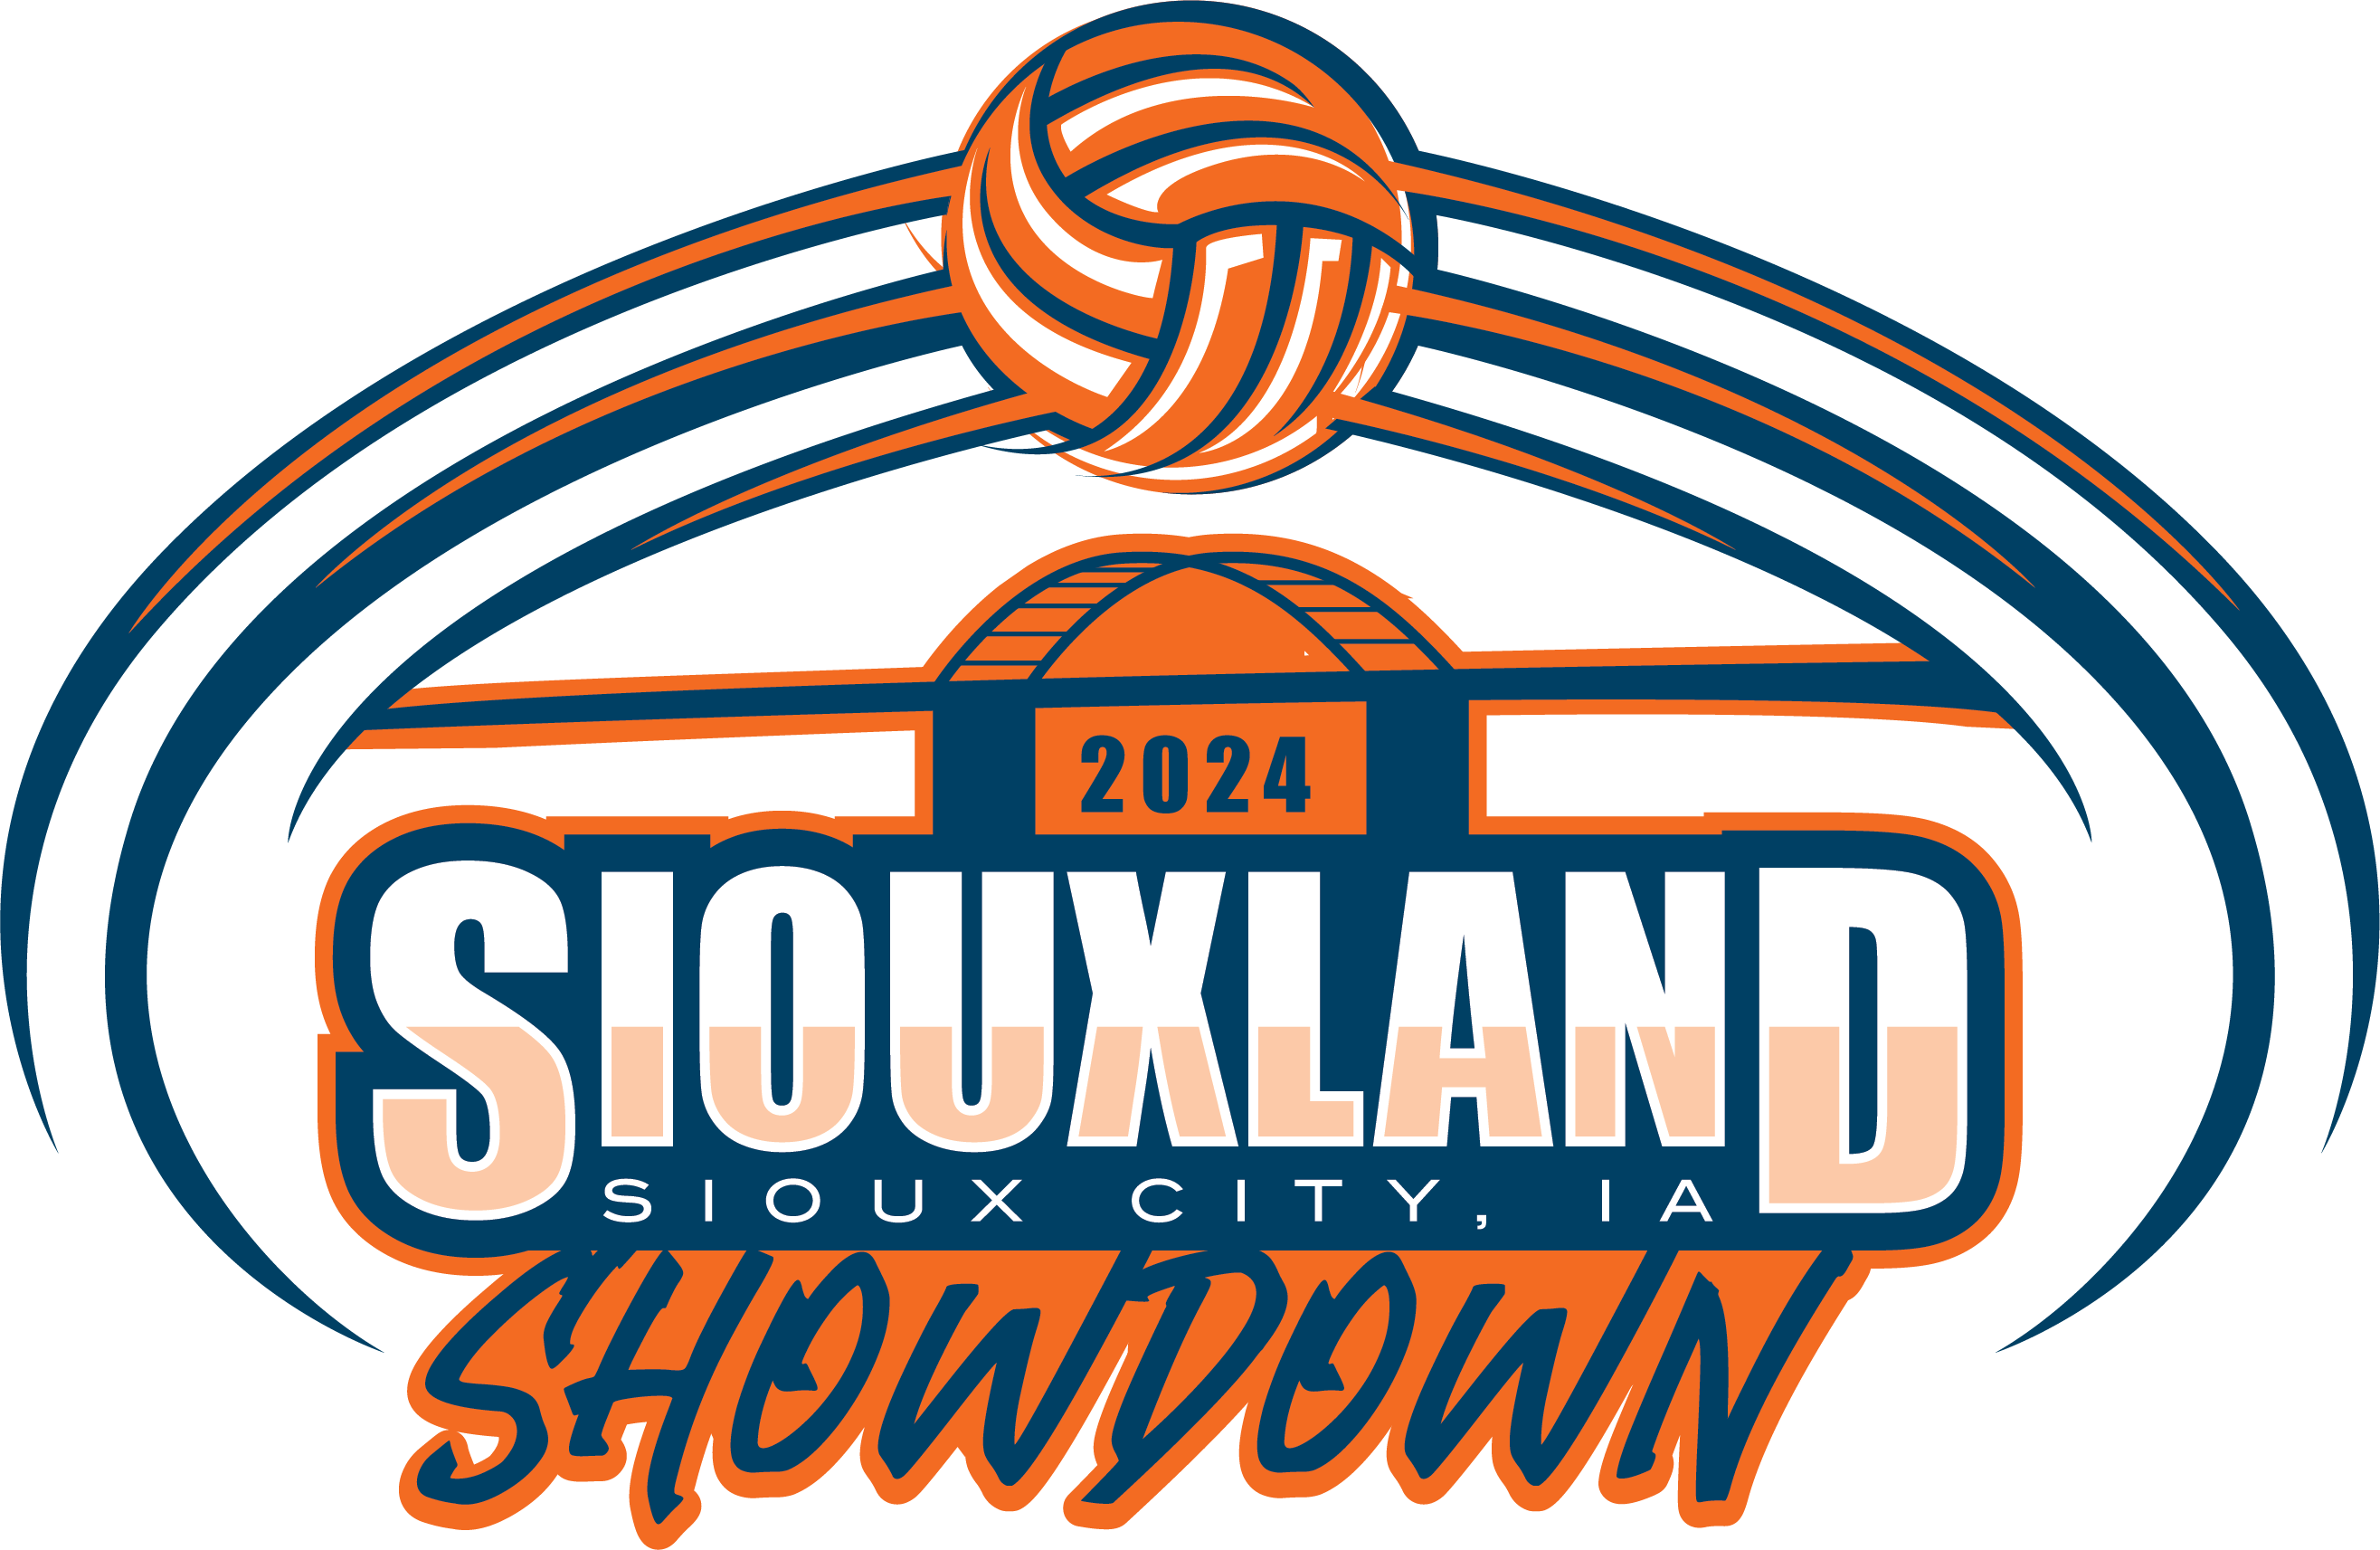 2024 Siouxland Showdown